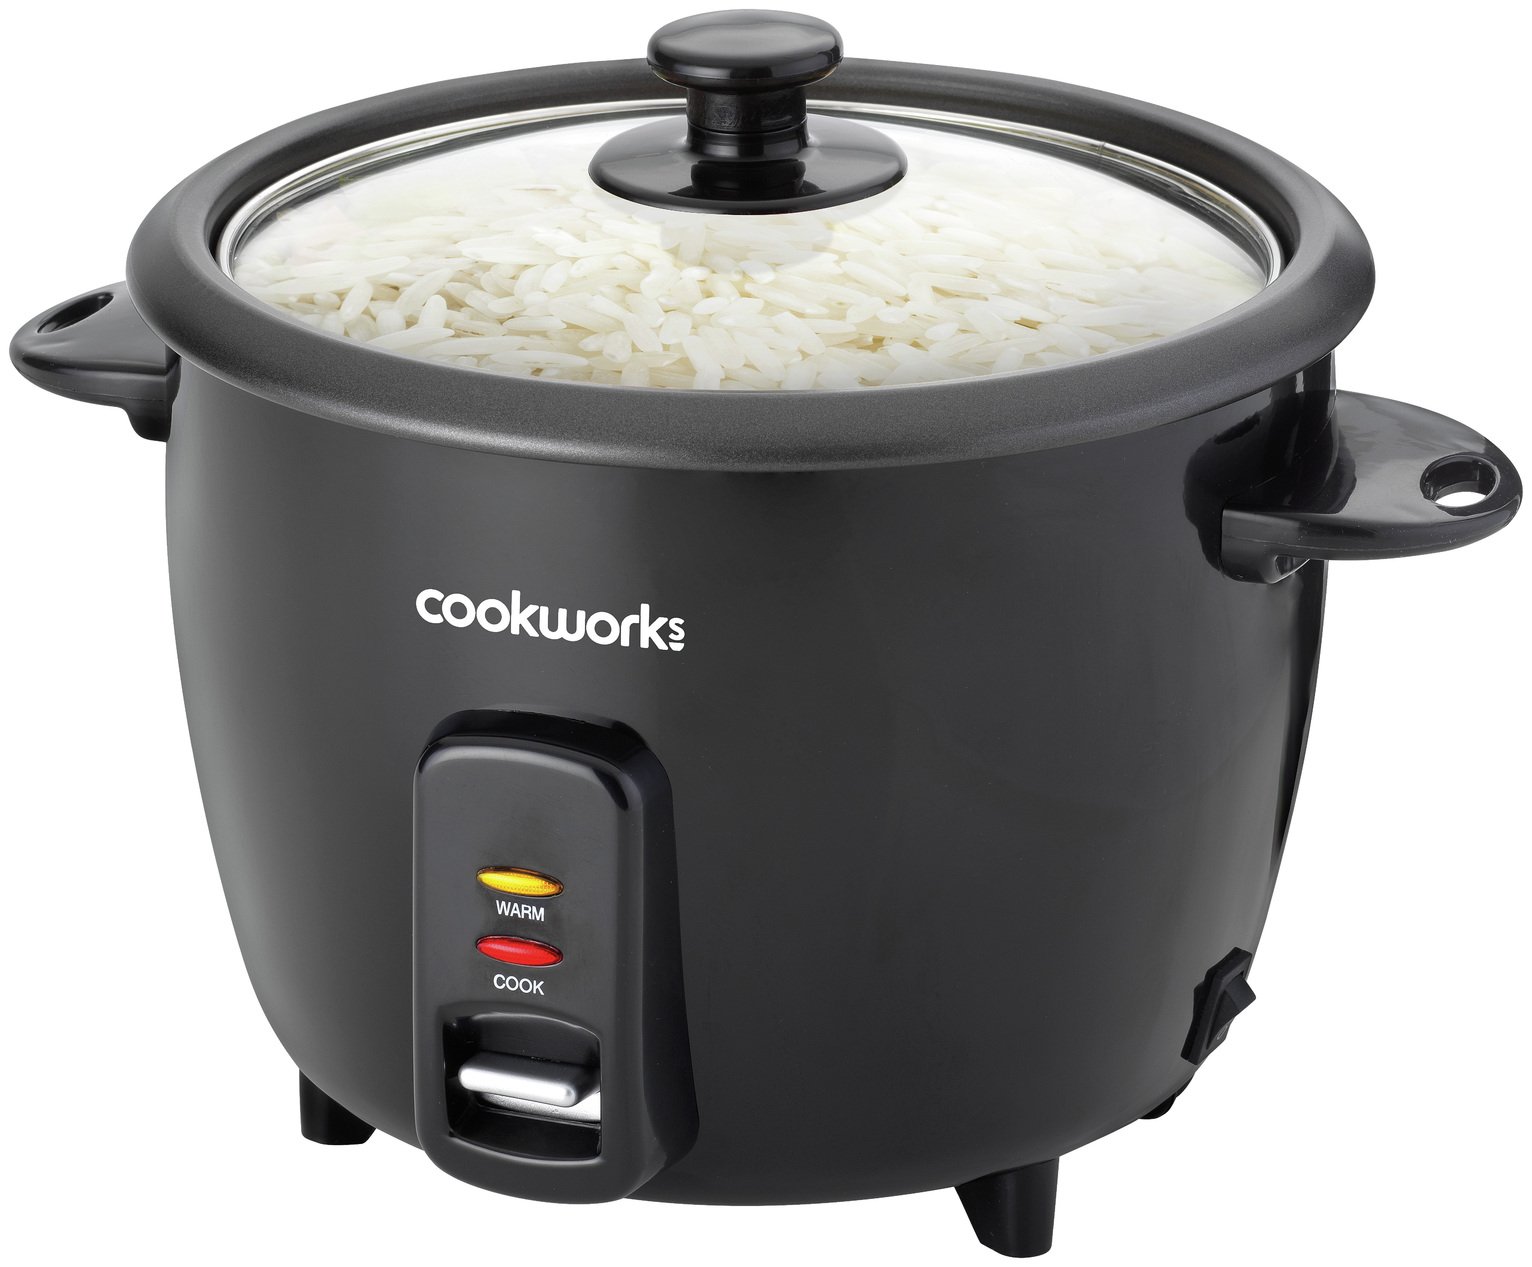 Cookworks 1.5L Rice Cooker Reviews